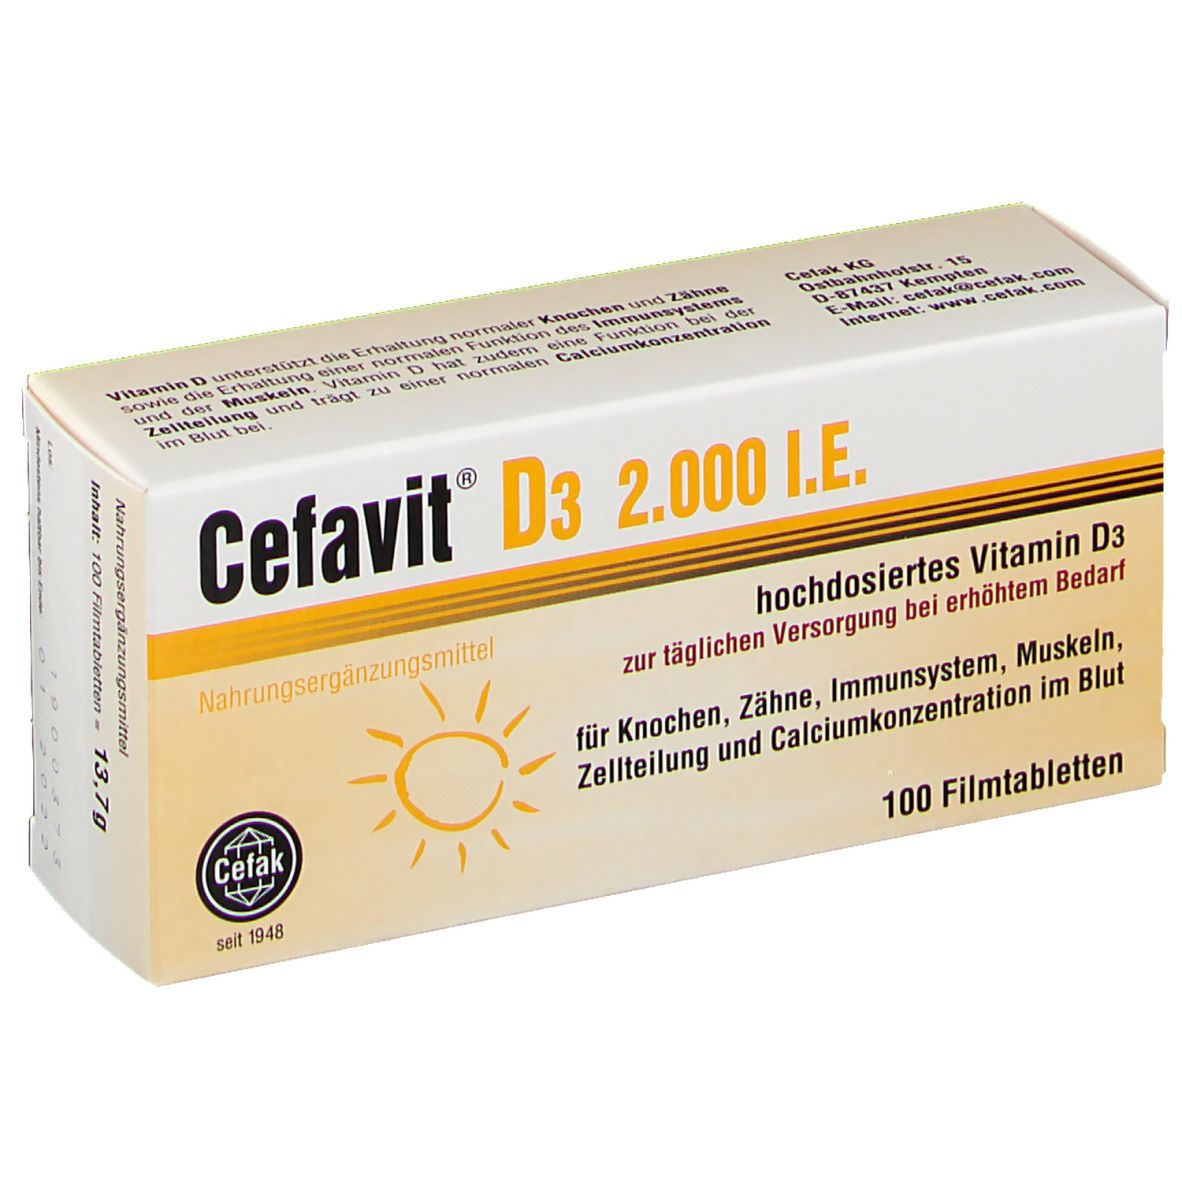 Image of Cefavit® D3 2.000 I.E.